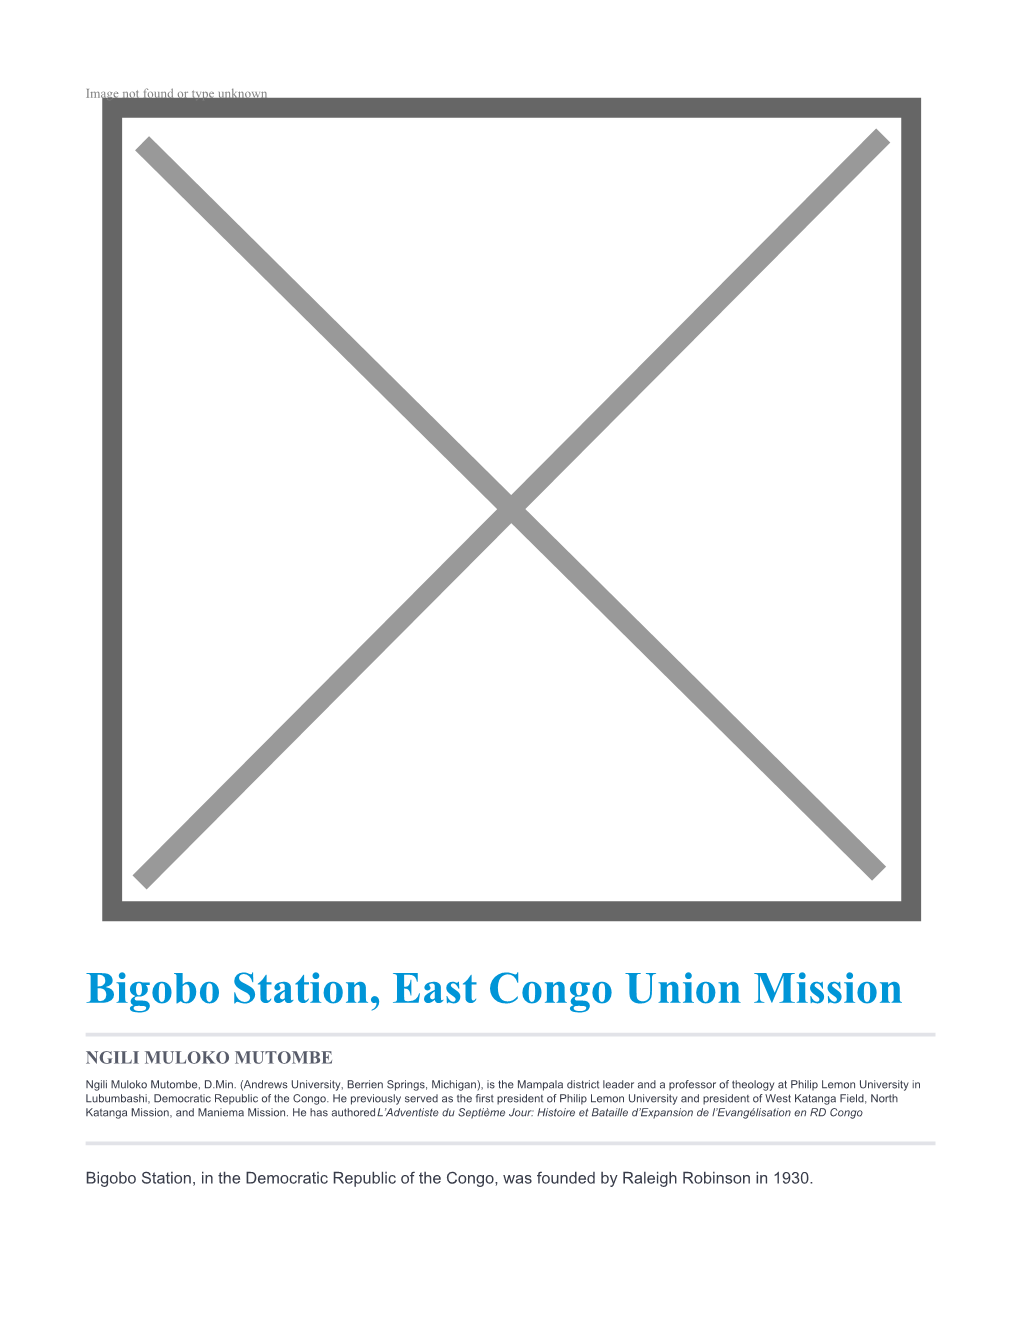 Bigobo Station, East Congo Union Mission